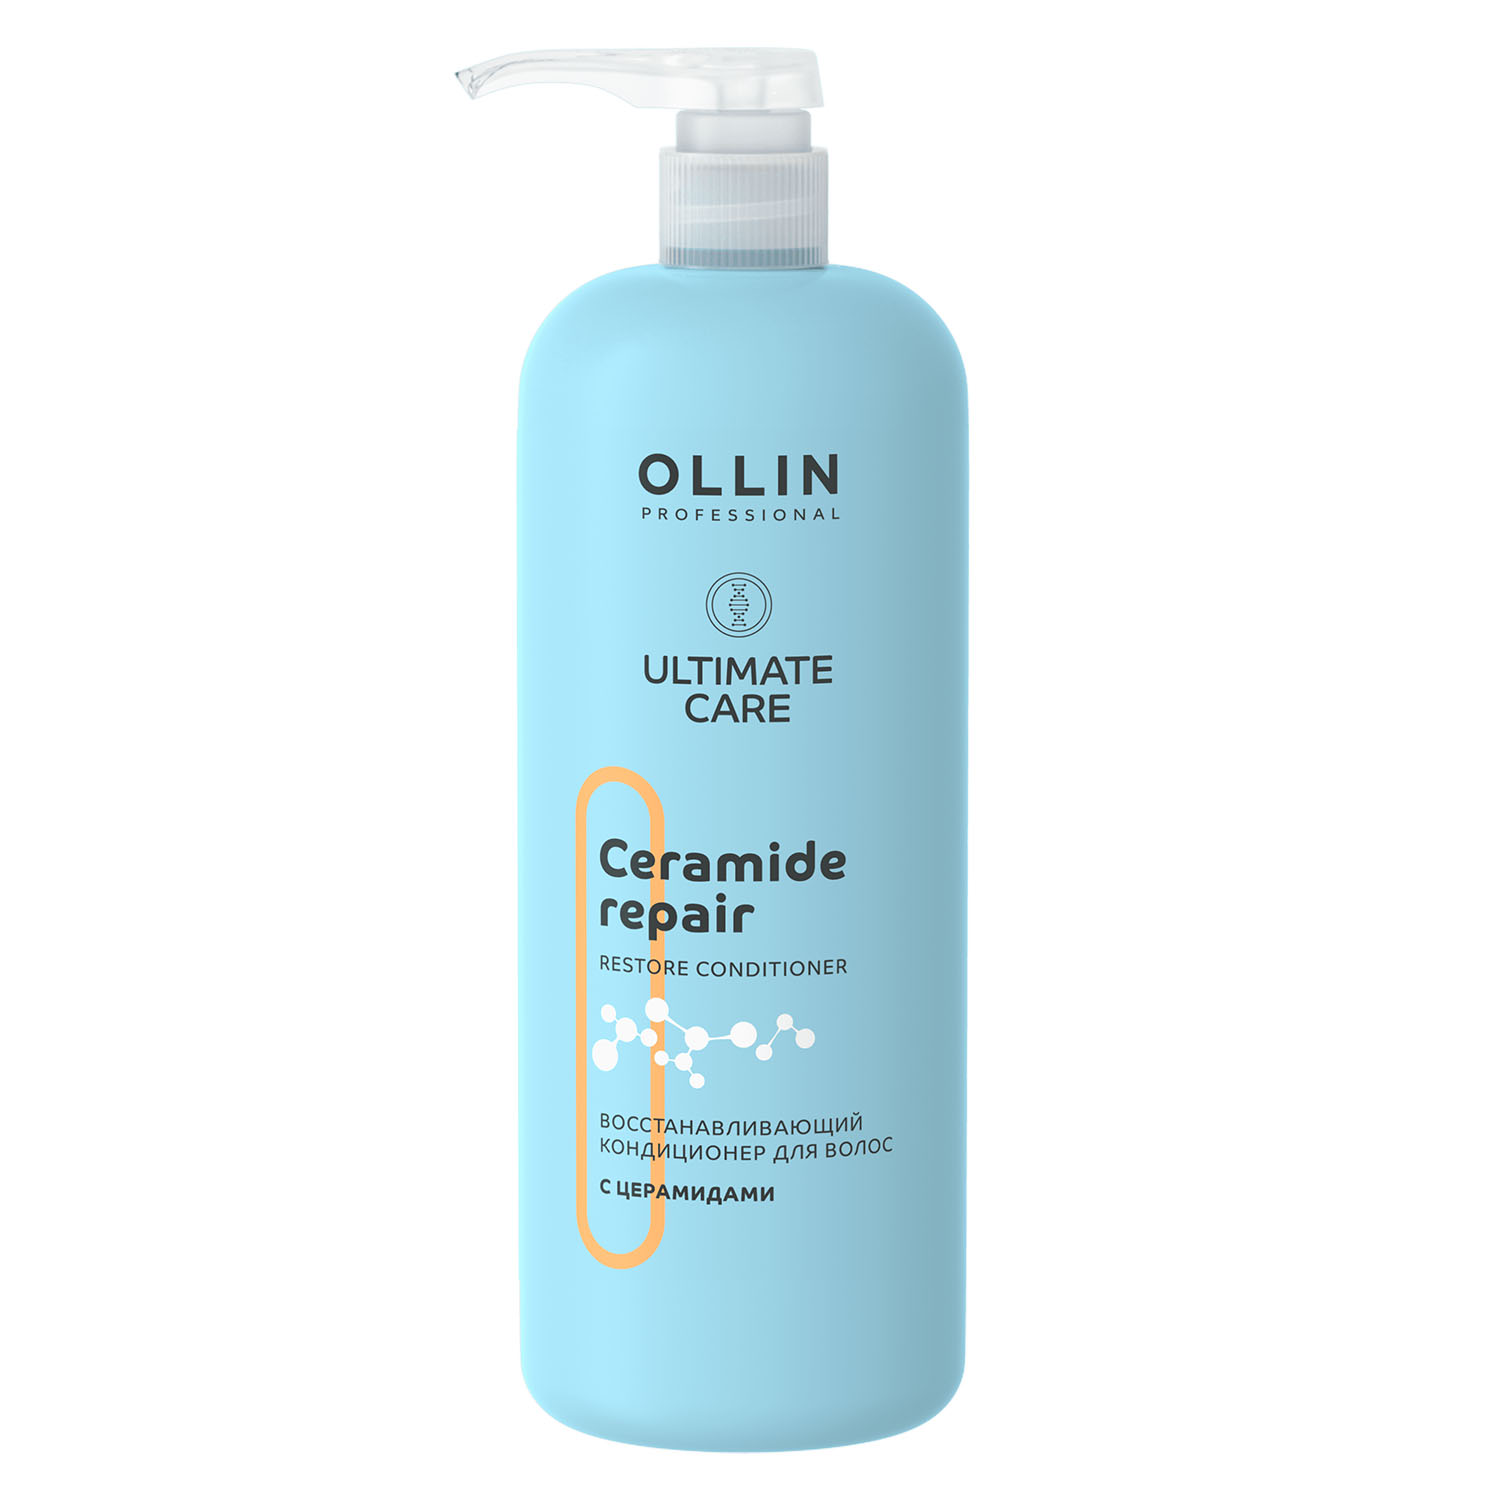 Ollin Professional Восстанавливающий кондиционер для волос с церамидами, 1000 мл (Ollin Professional, Ultimate Care) восстанавливающий кондиционер для волос ollin professional ultimate care repair conditioner 1000 мл